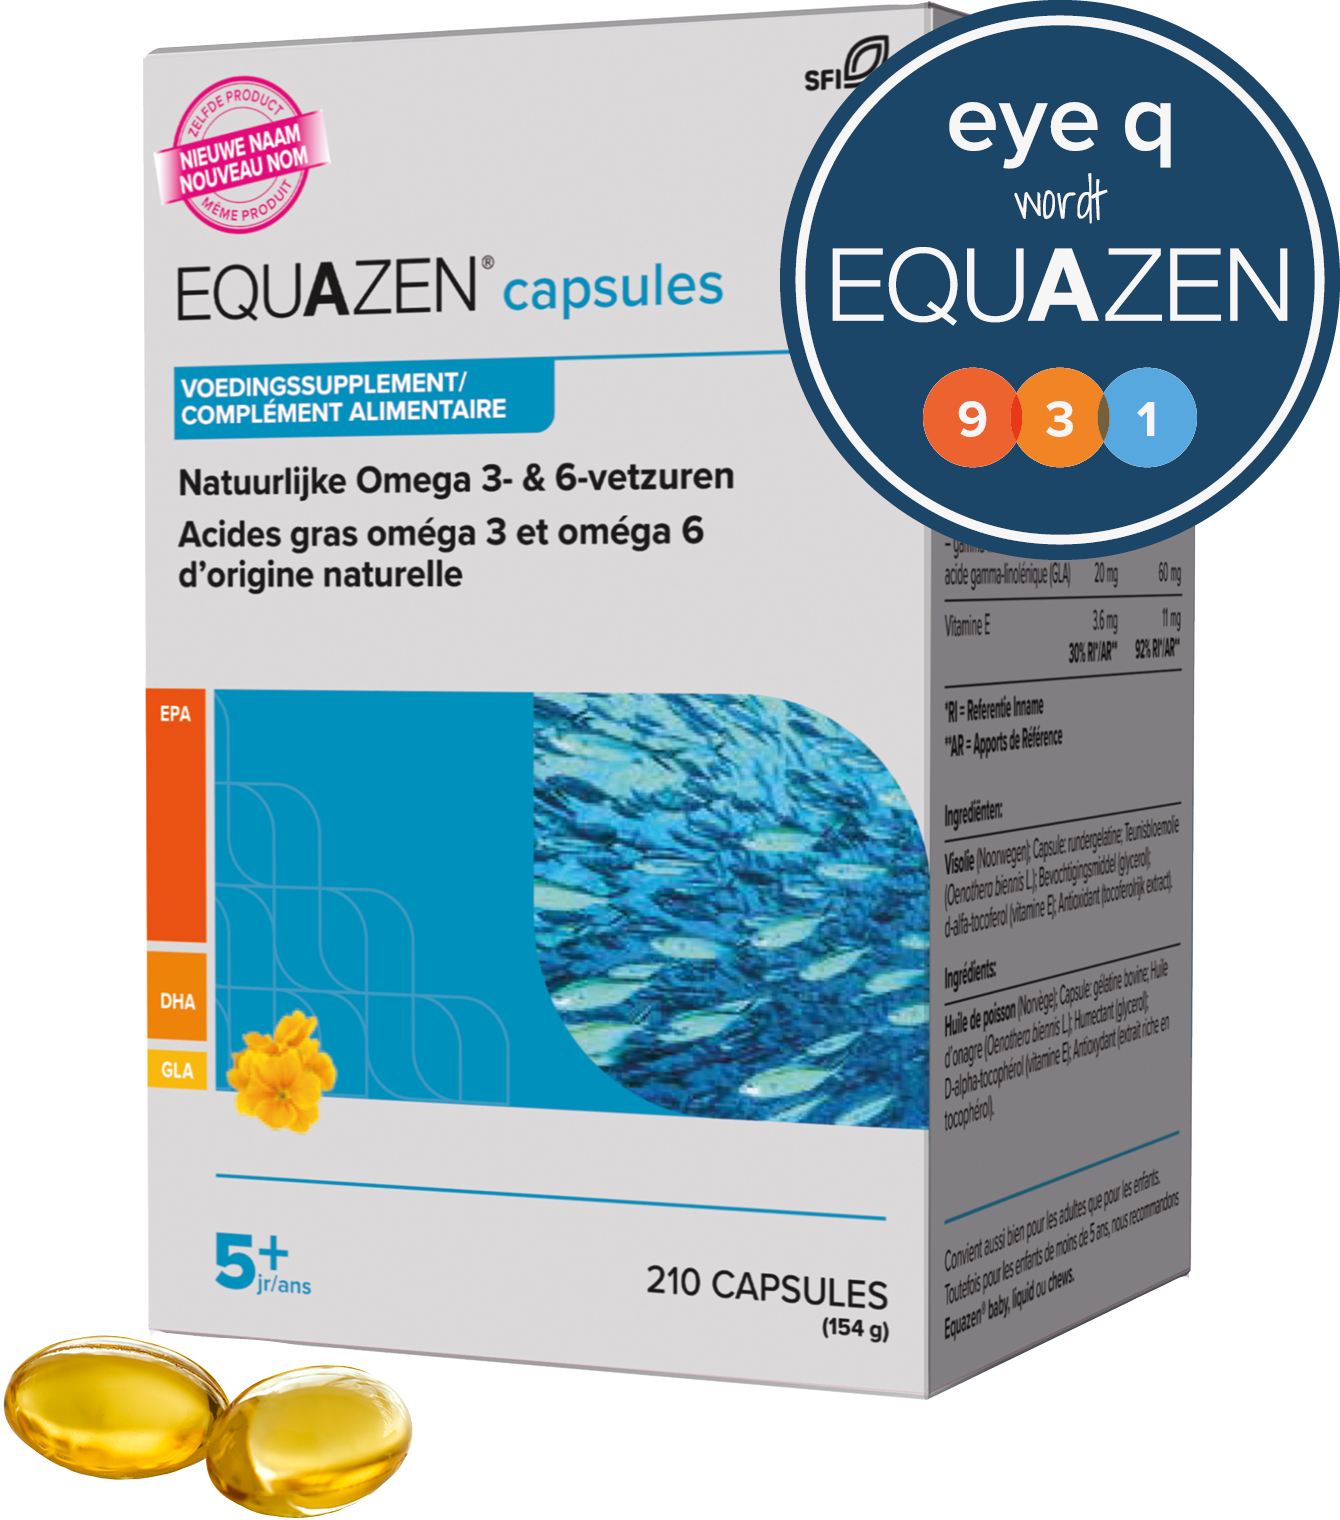 Equazen capsules 210 - omega 3- en 6-vetzuren EPA, DHA, GLA - Eye Q wordt Equazen